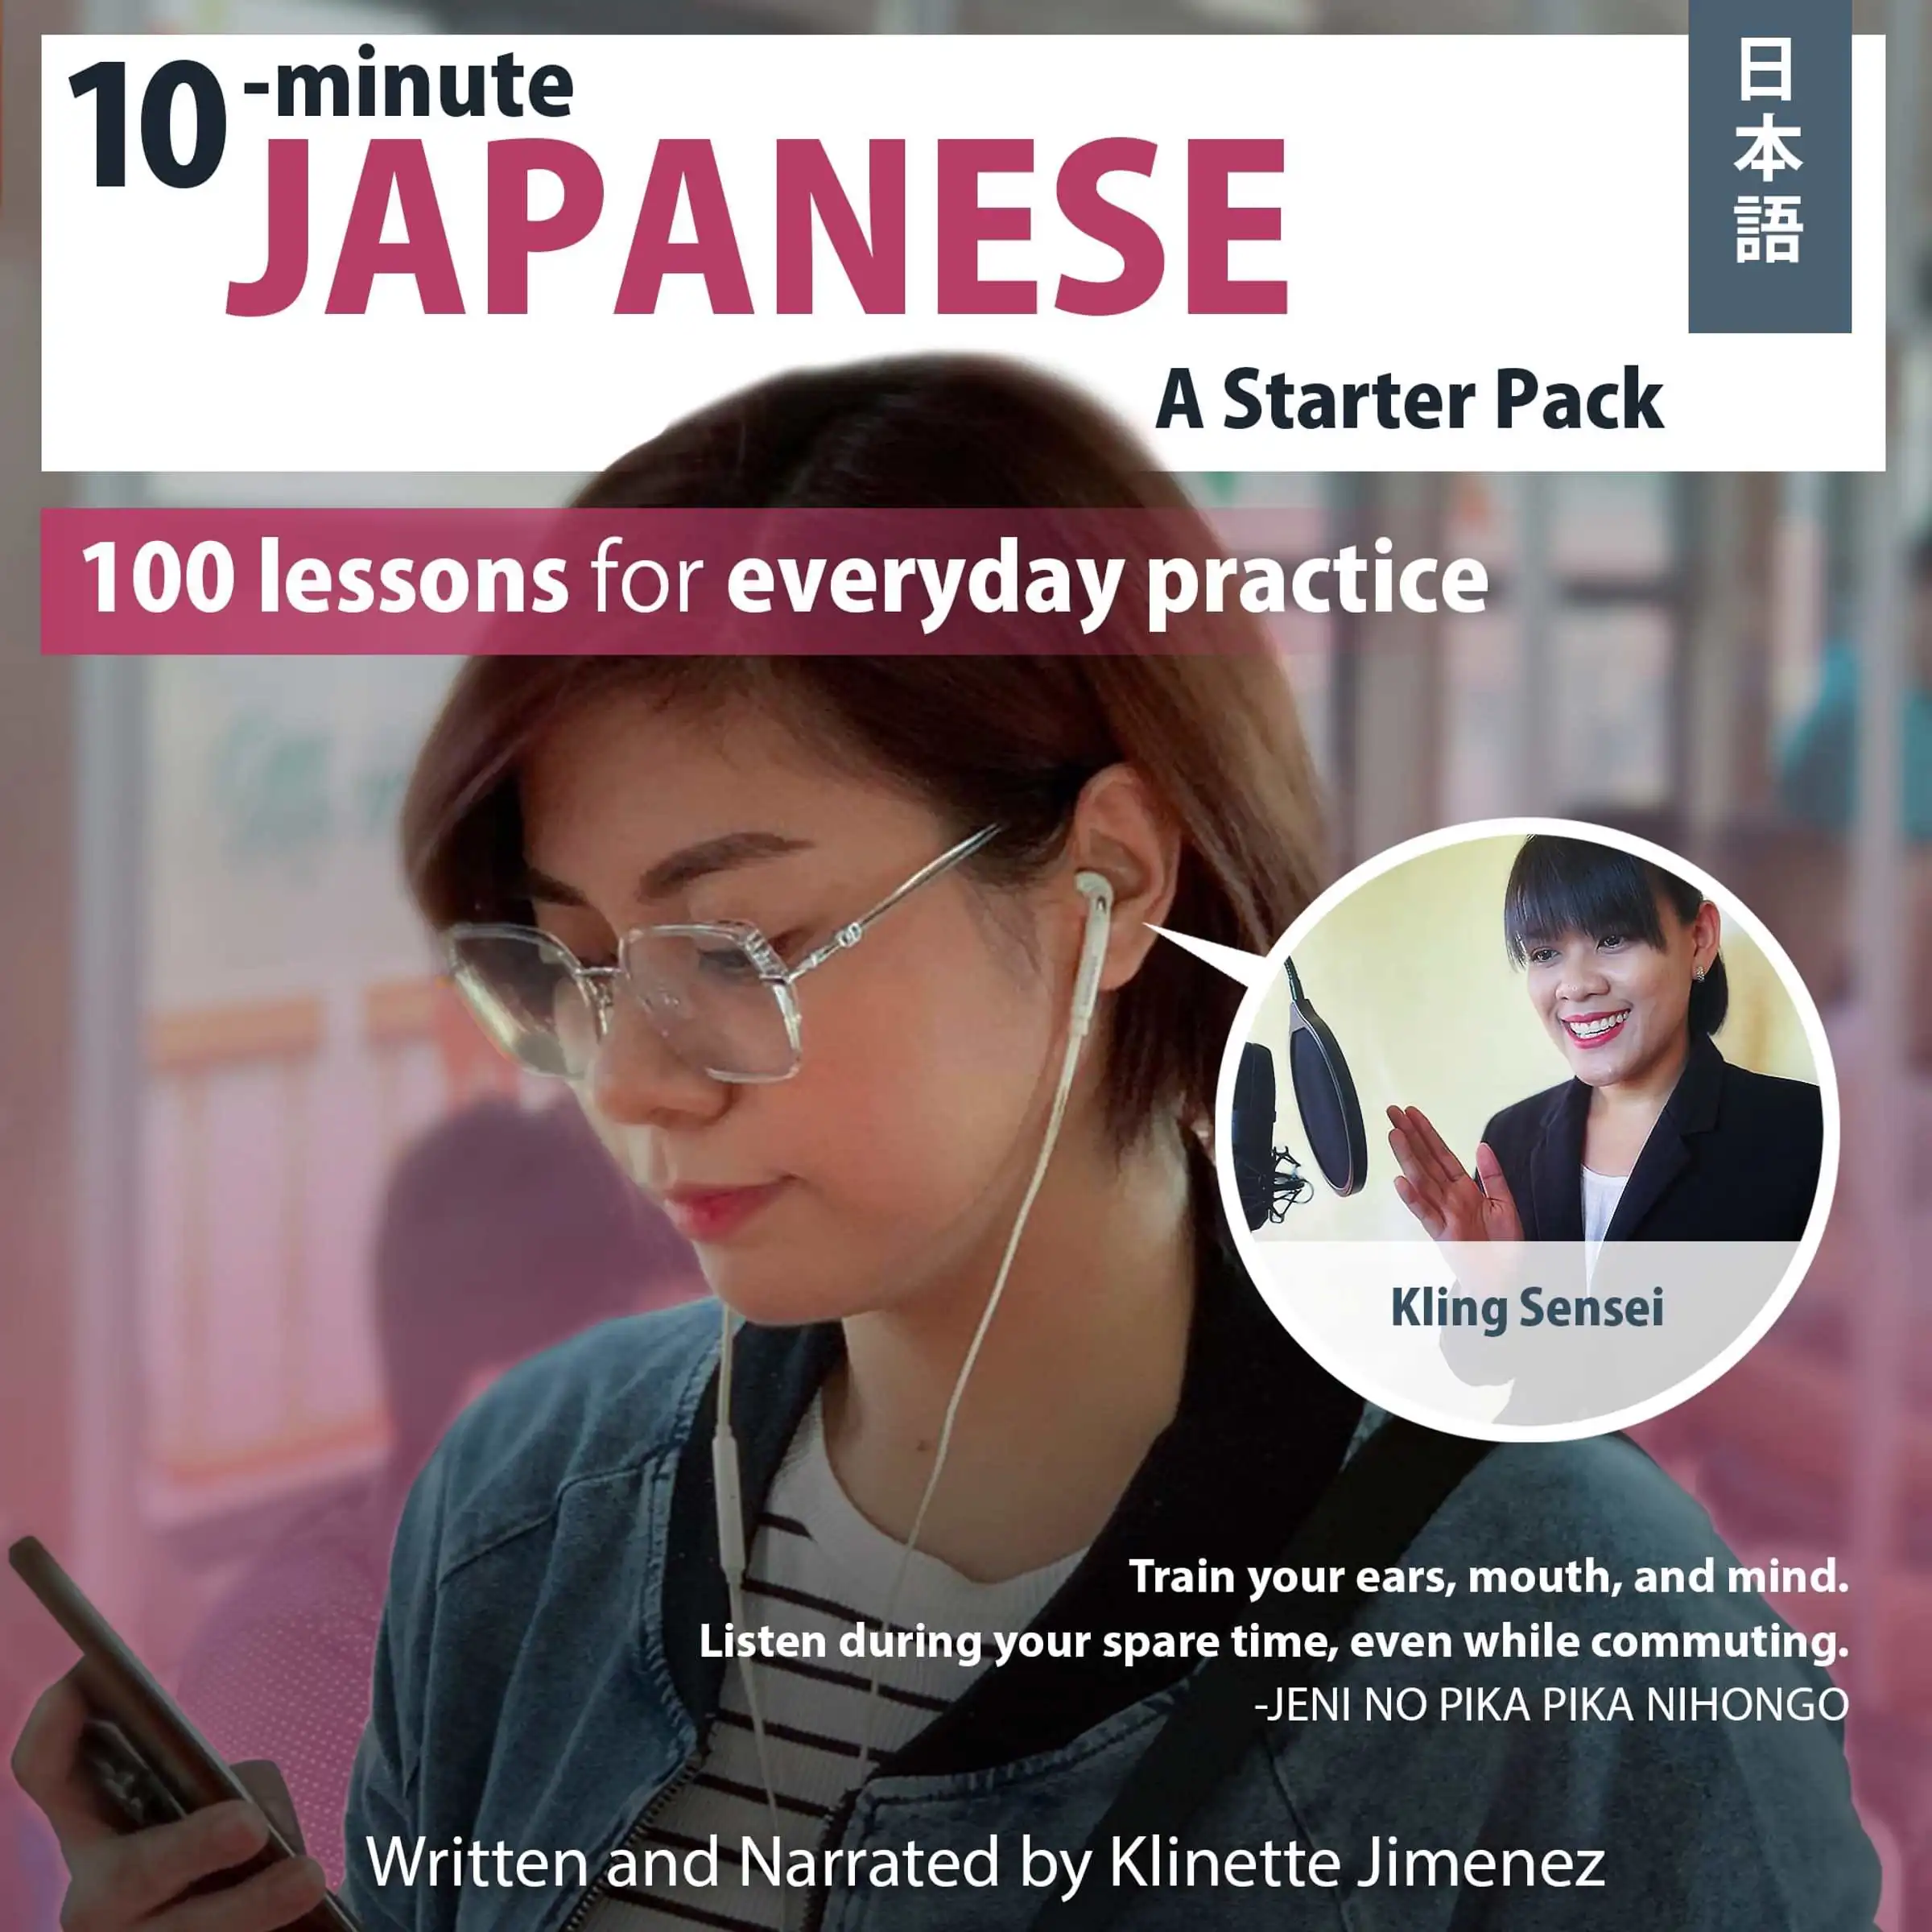 10-minute Japanese A Starter Pack Audiobook by Klinette Jimenez